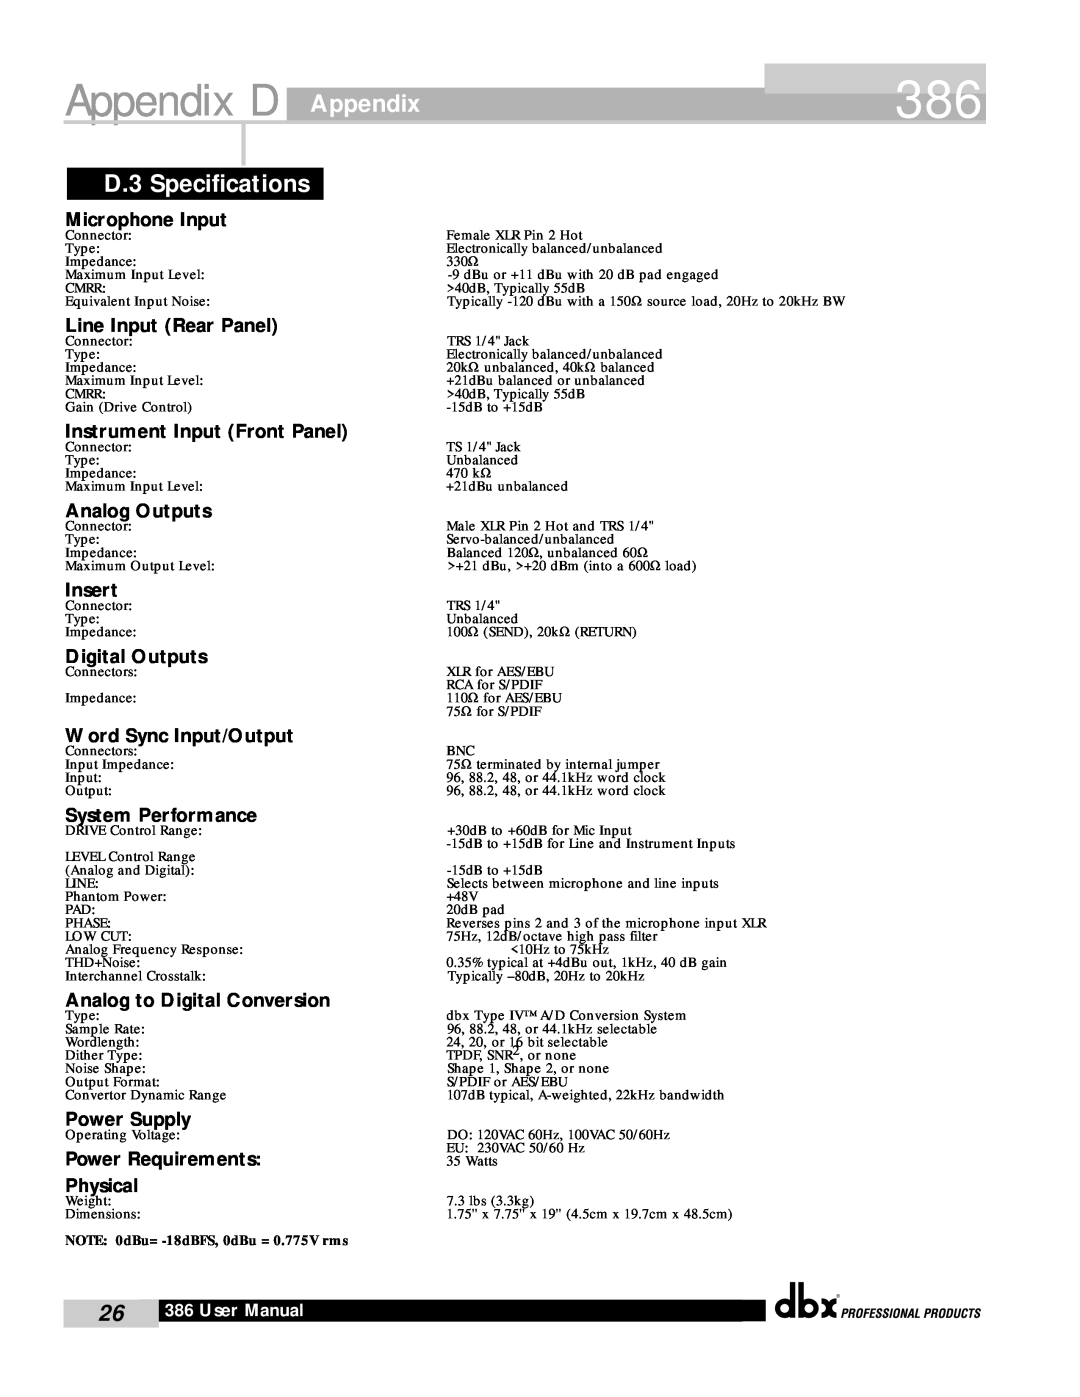 dbx Pro 386 user manual Appendix D, D.3 Specifications 